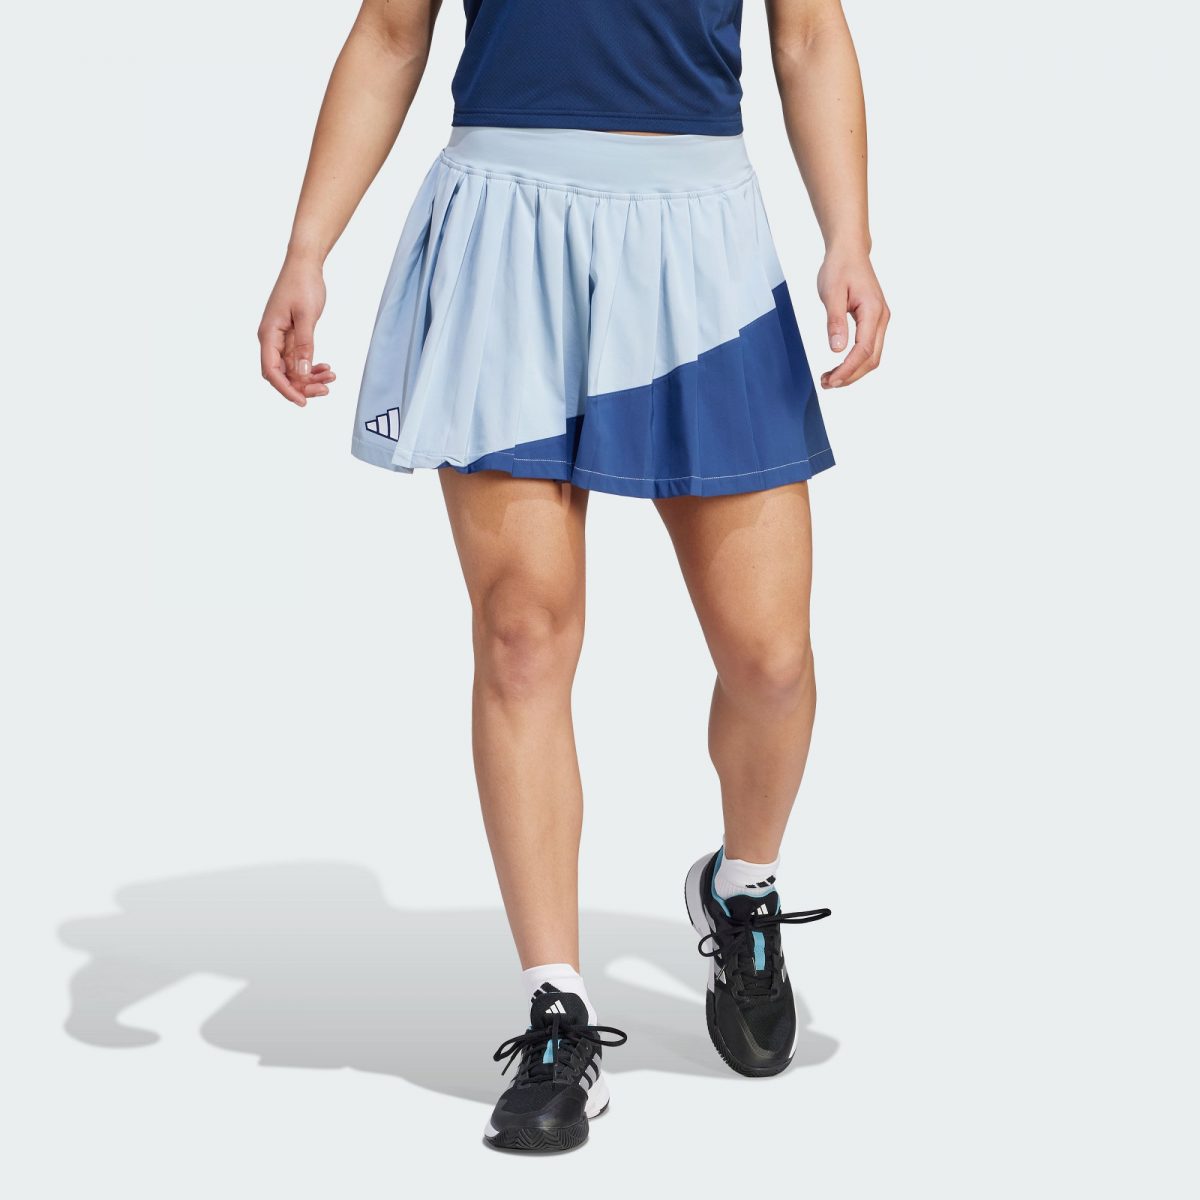 Женская юбка adidas CLUBHOUSE TENNIS PREMIUM SKIRT фото